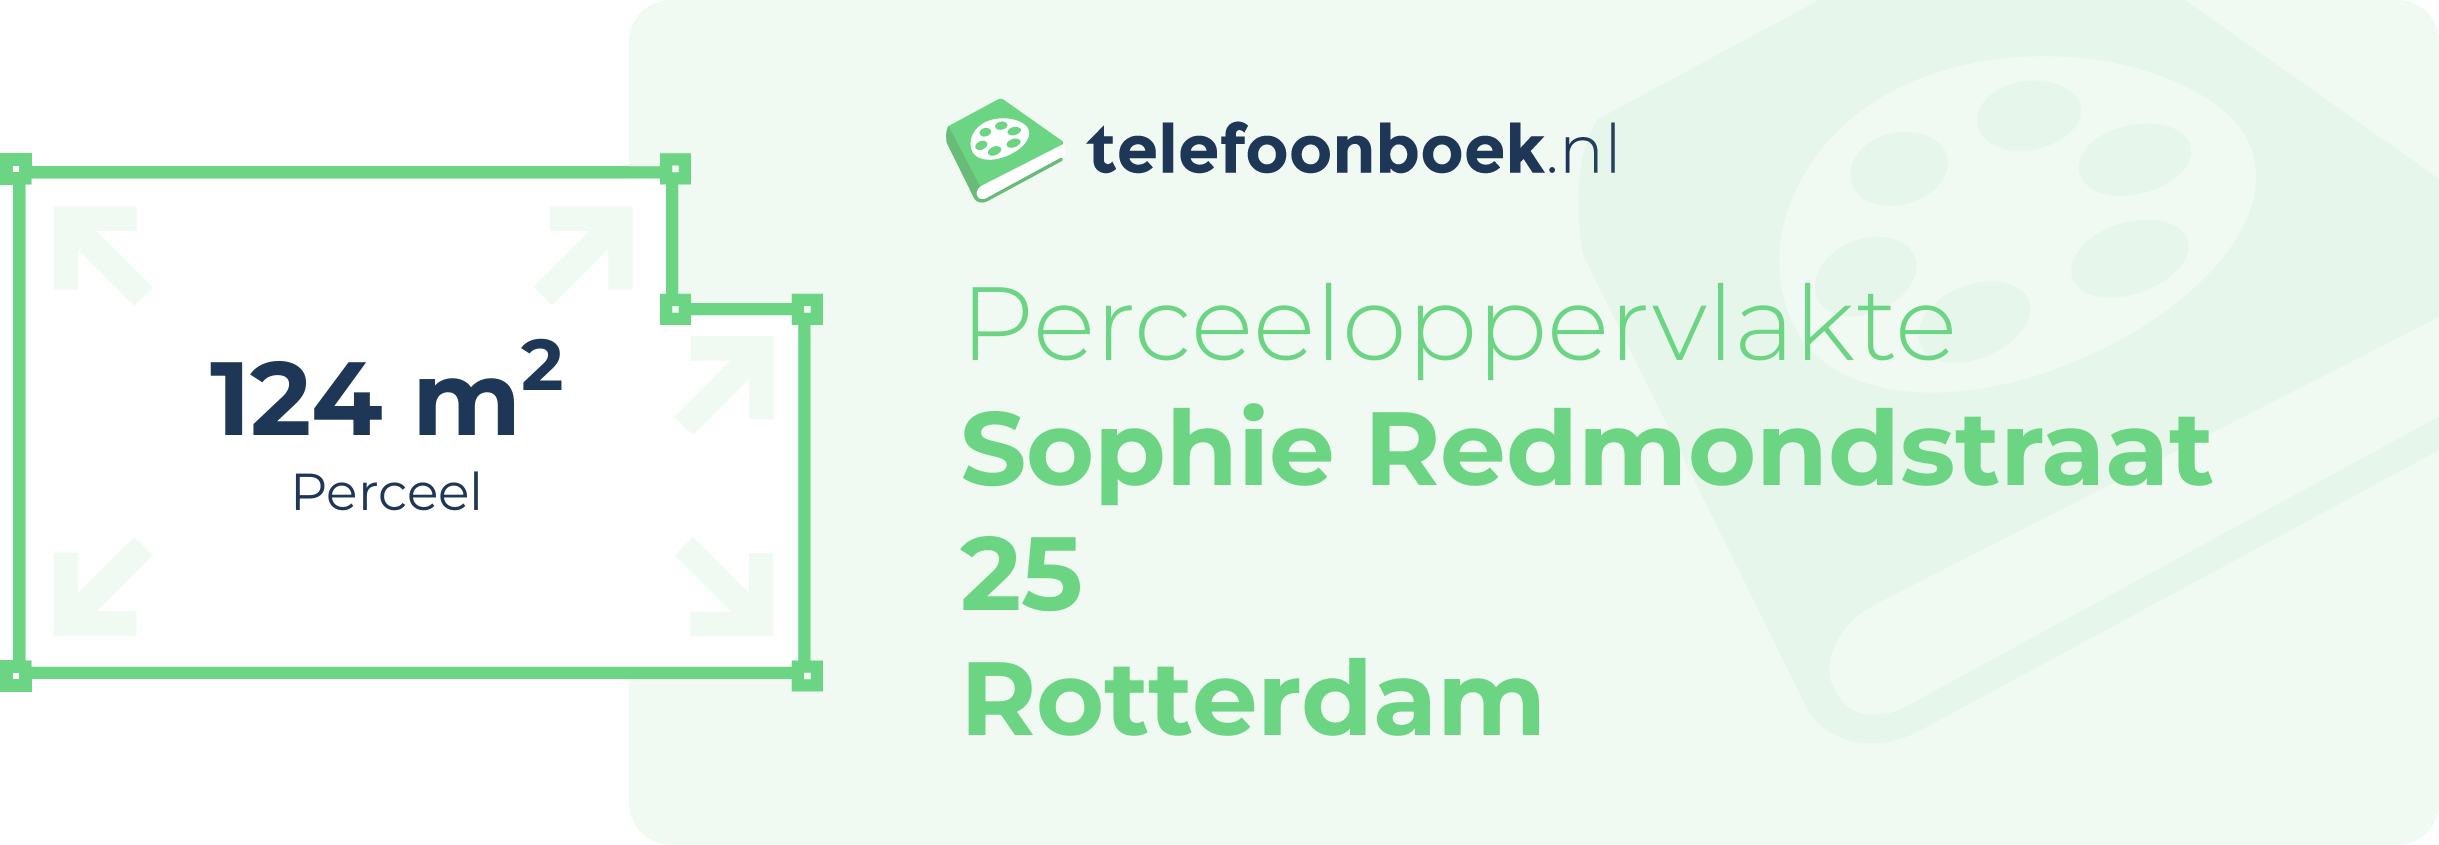 Perceeloppervlakte Sophie Redmondstraat 25 Rotterdam